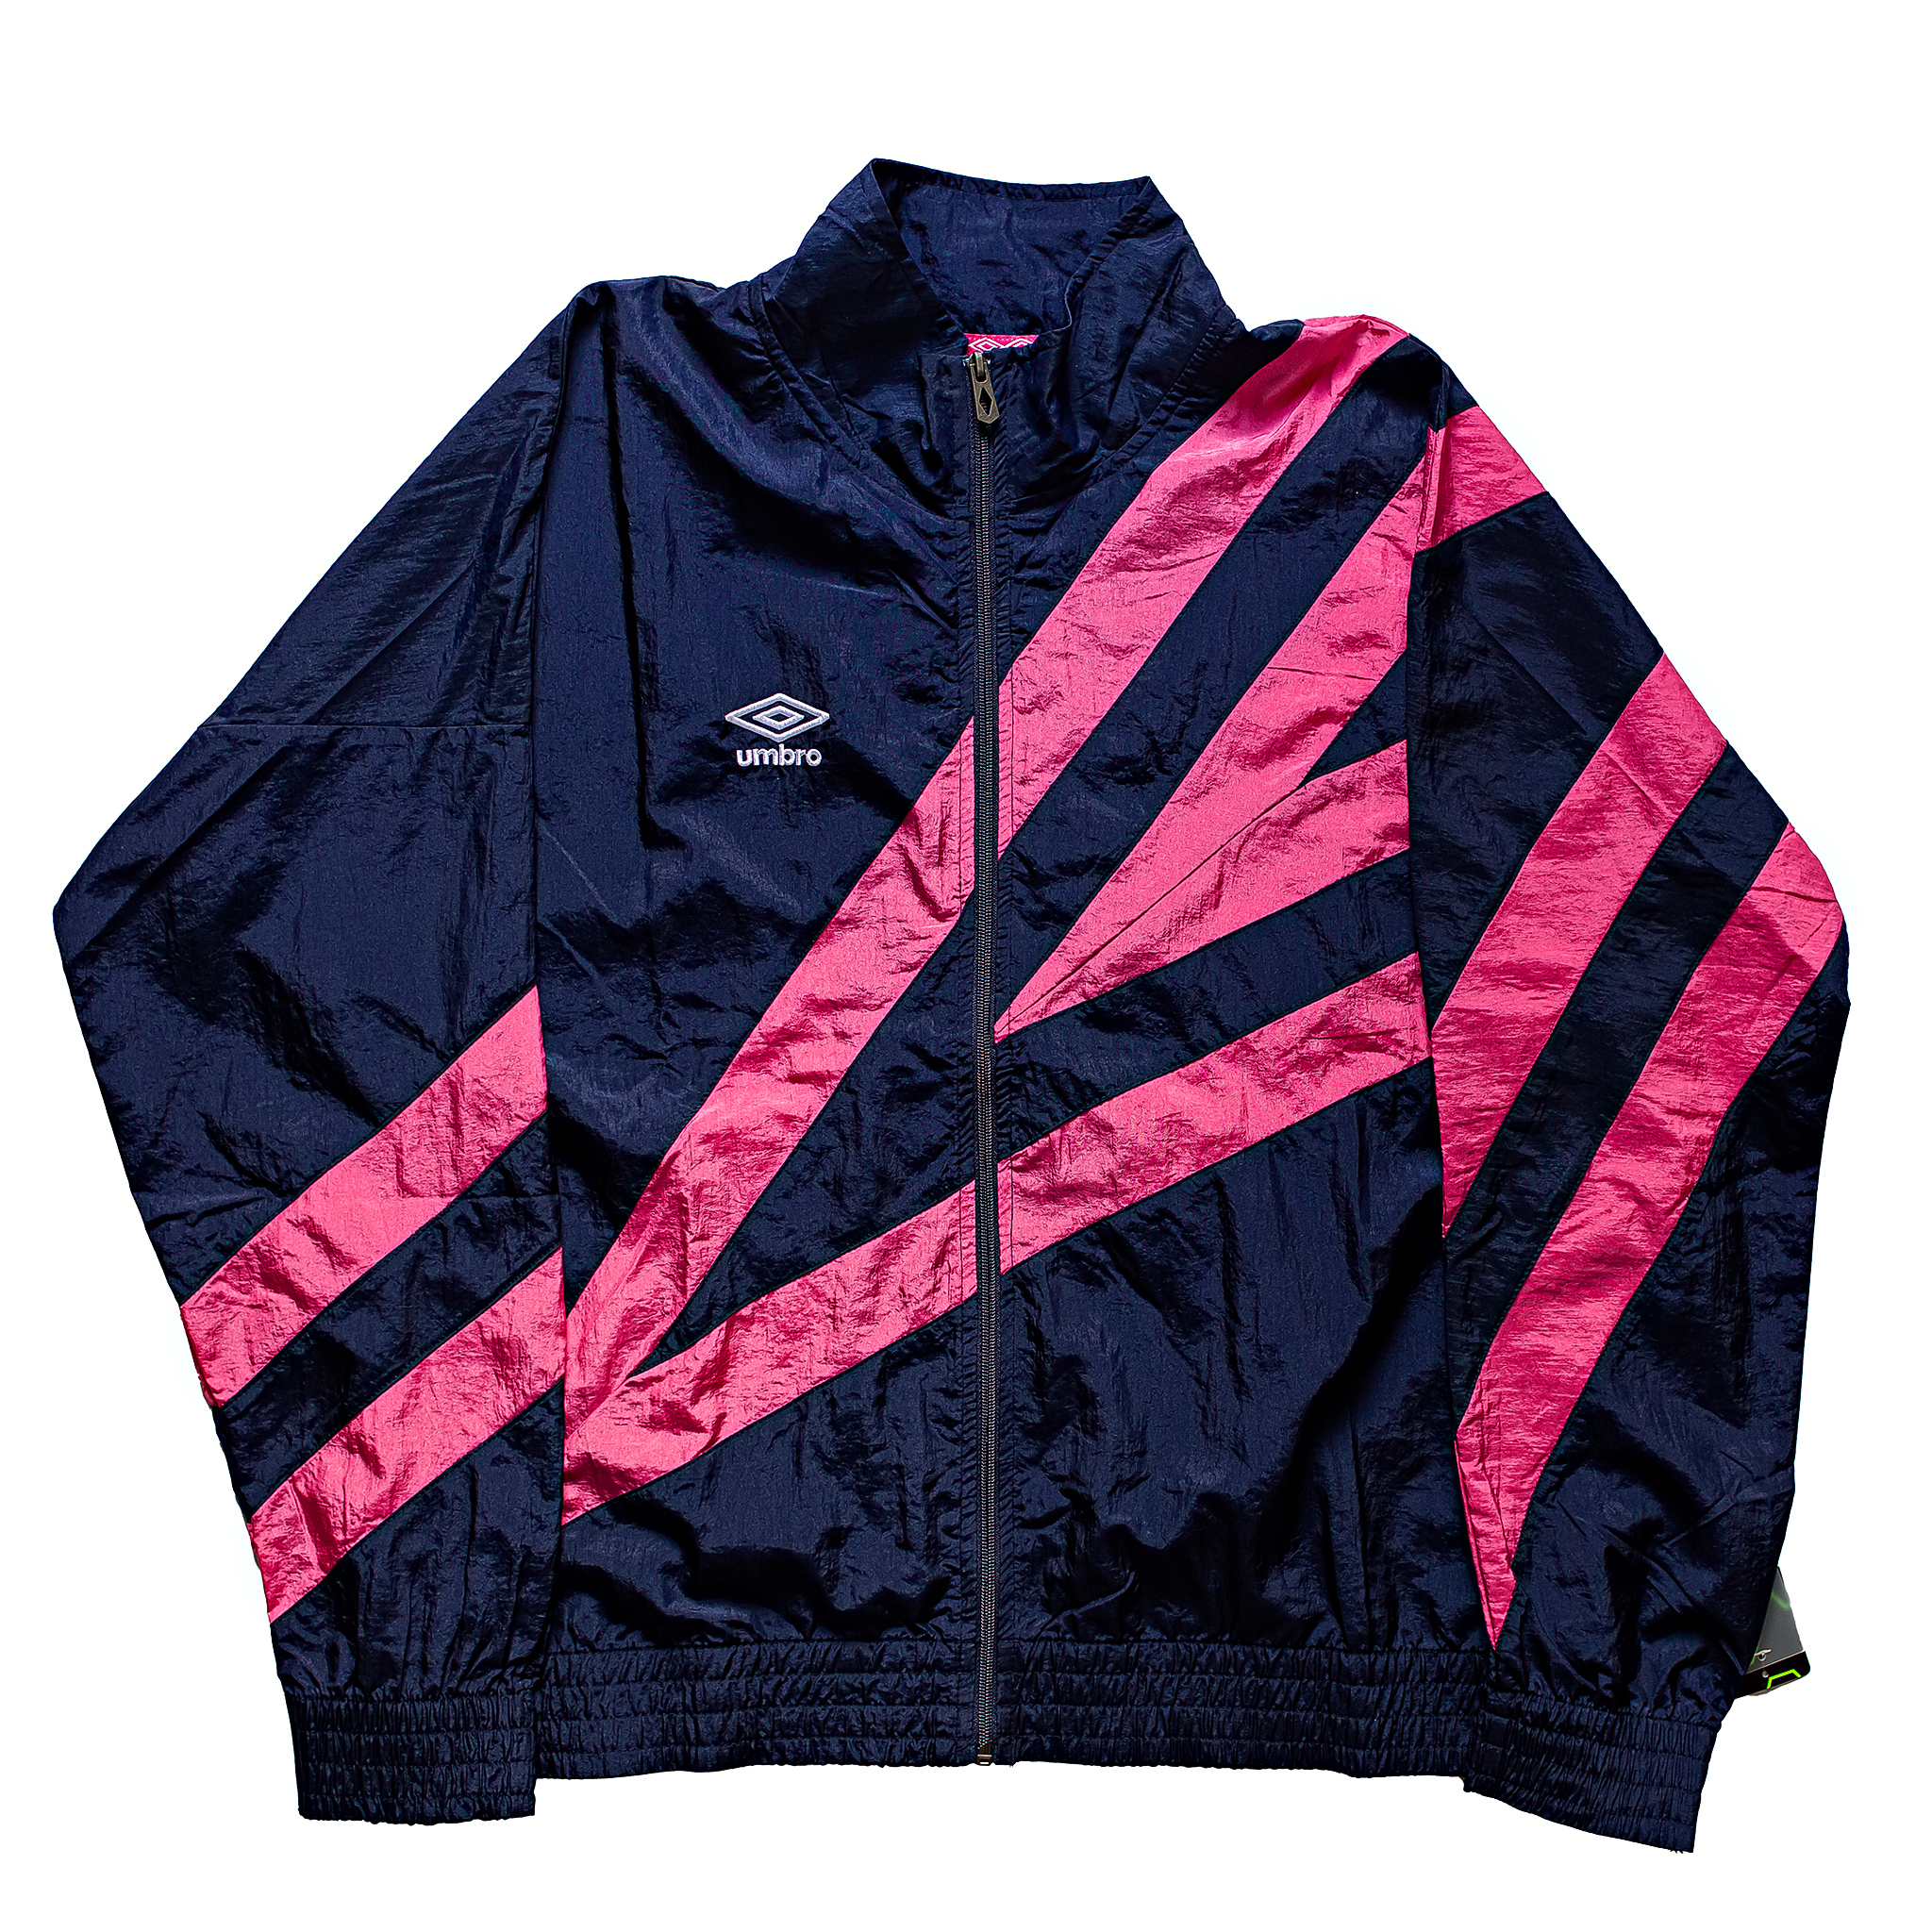 Product Vintage Umbro Track Jacket navy/pink - Minus1